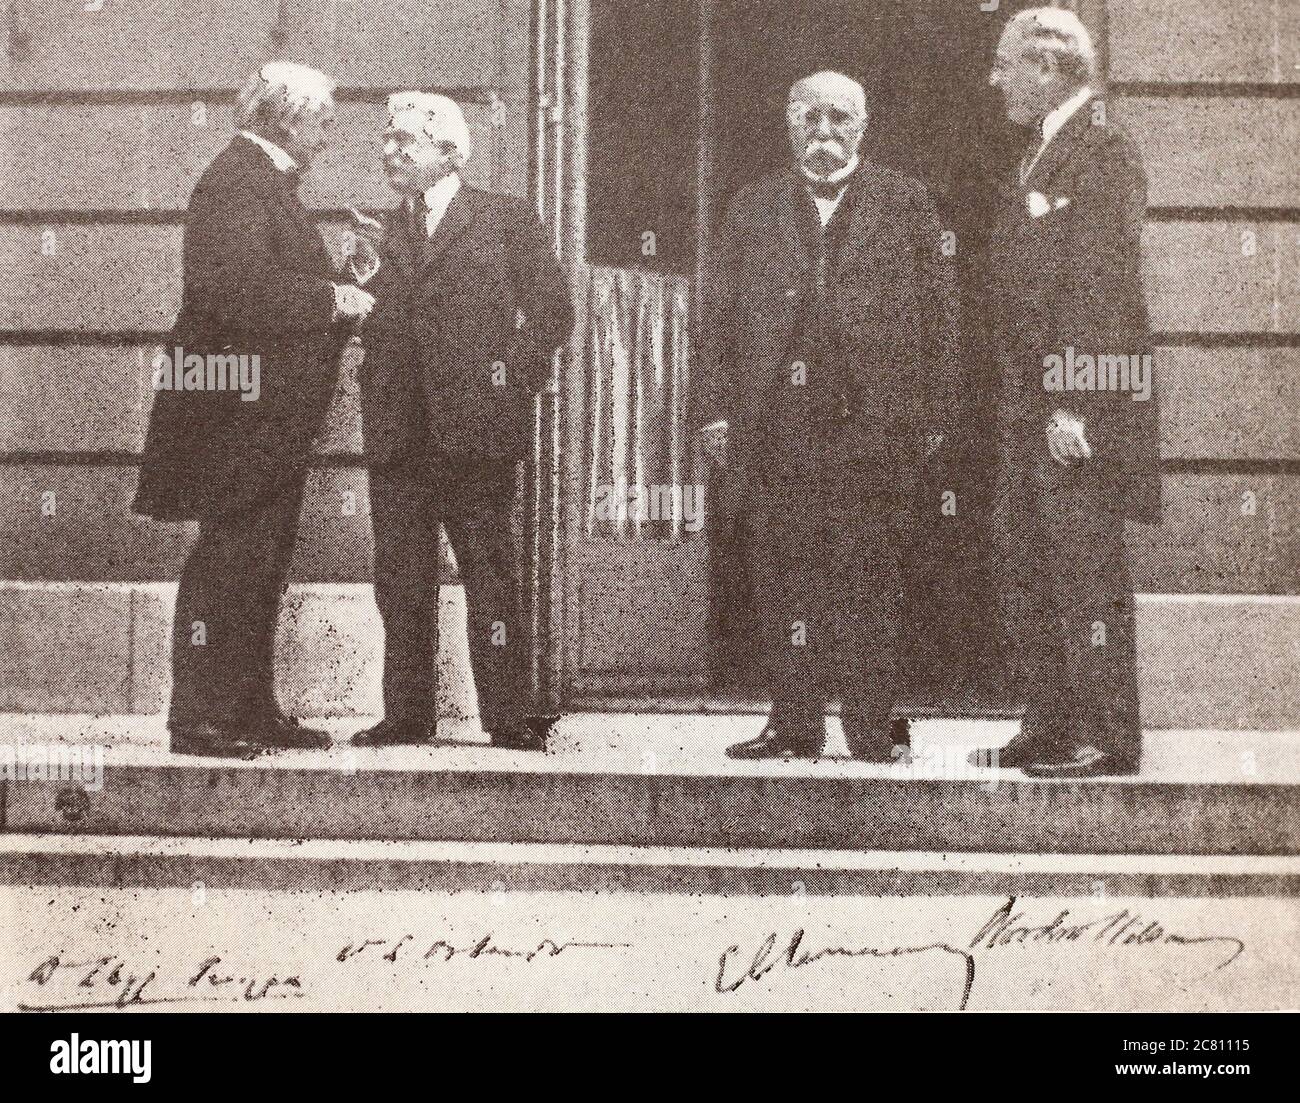 David Lloyd George, Vittorio Emanuele Orlando, Georges Clemenceau, Woodrow Wilson. Stock Photo